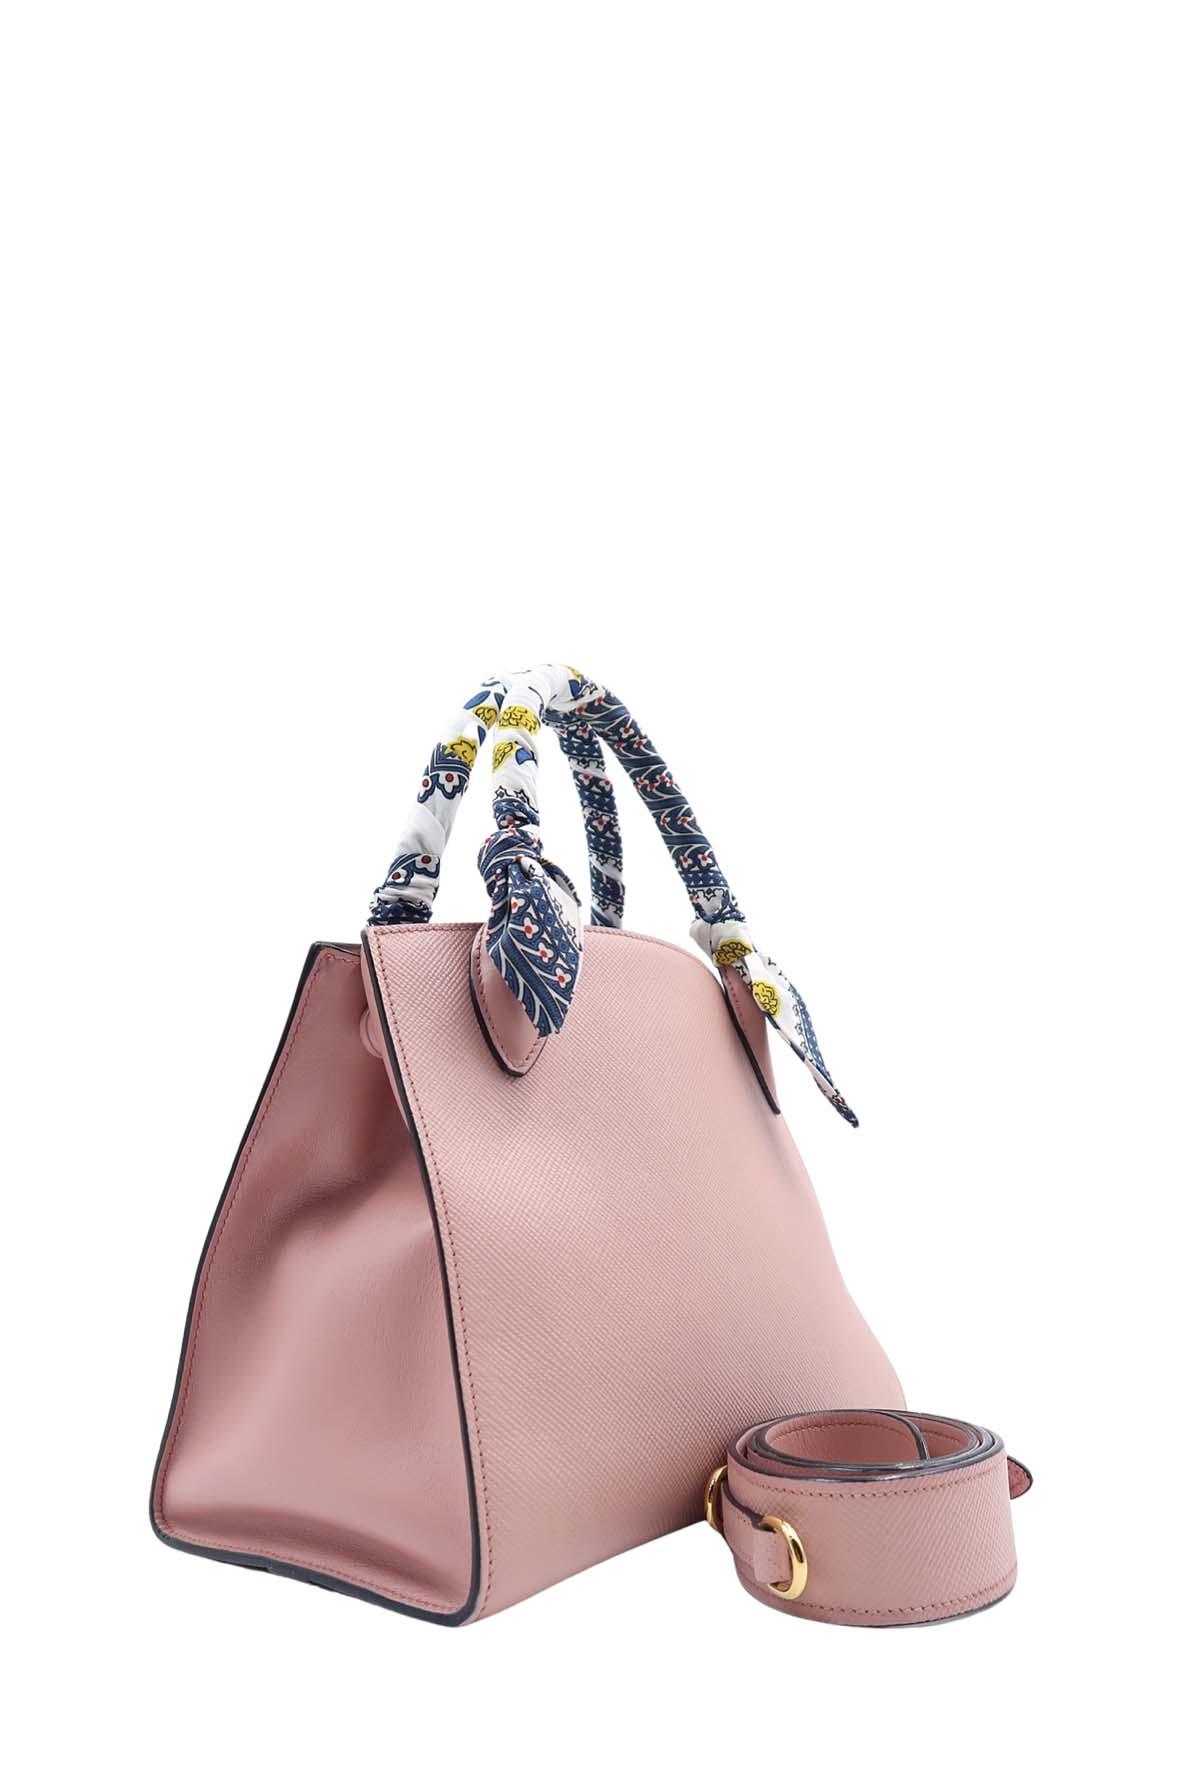 Prada Medium Saffiano Cuir Monochrome Bag - Pink Handle Bags